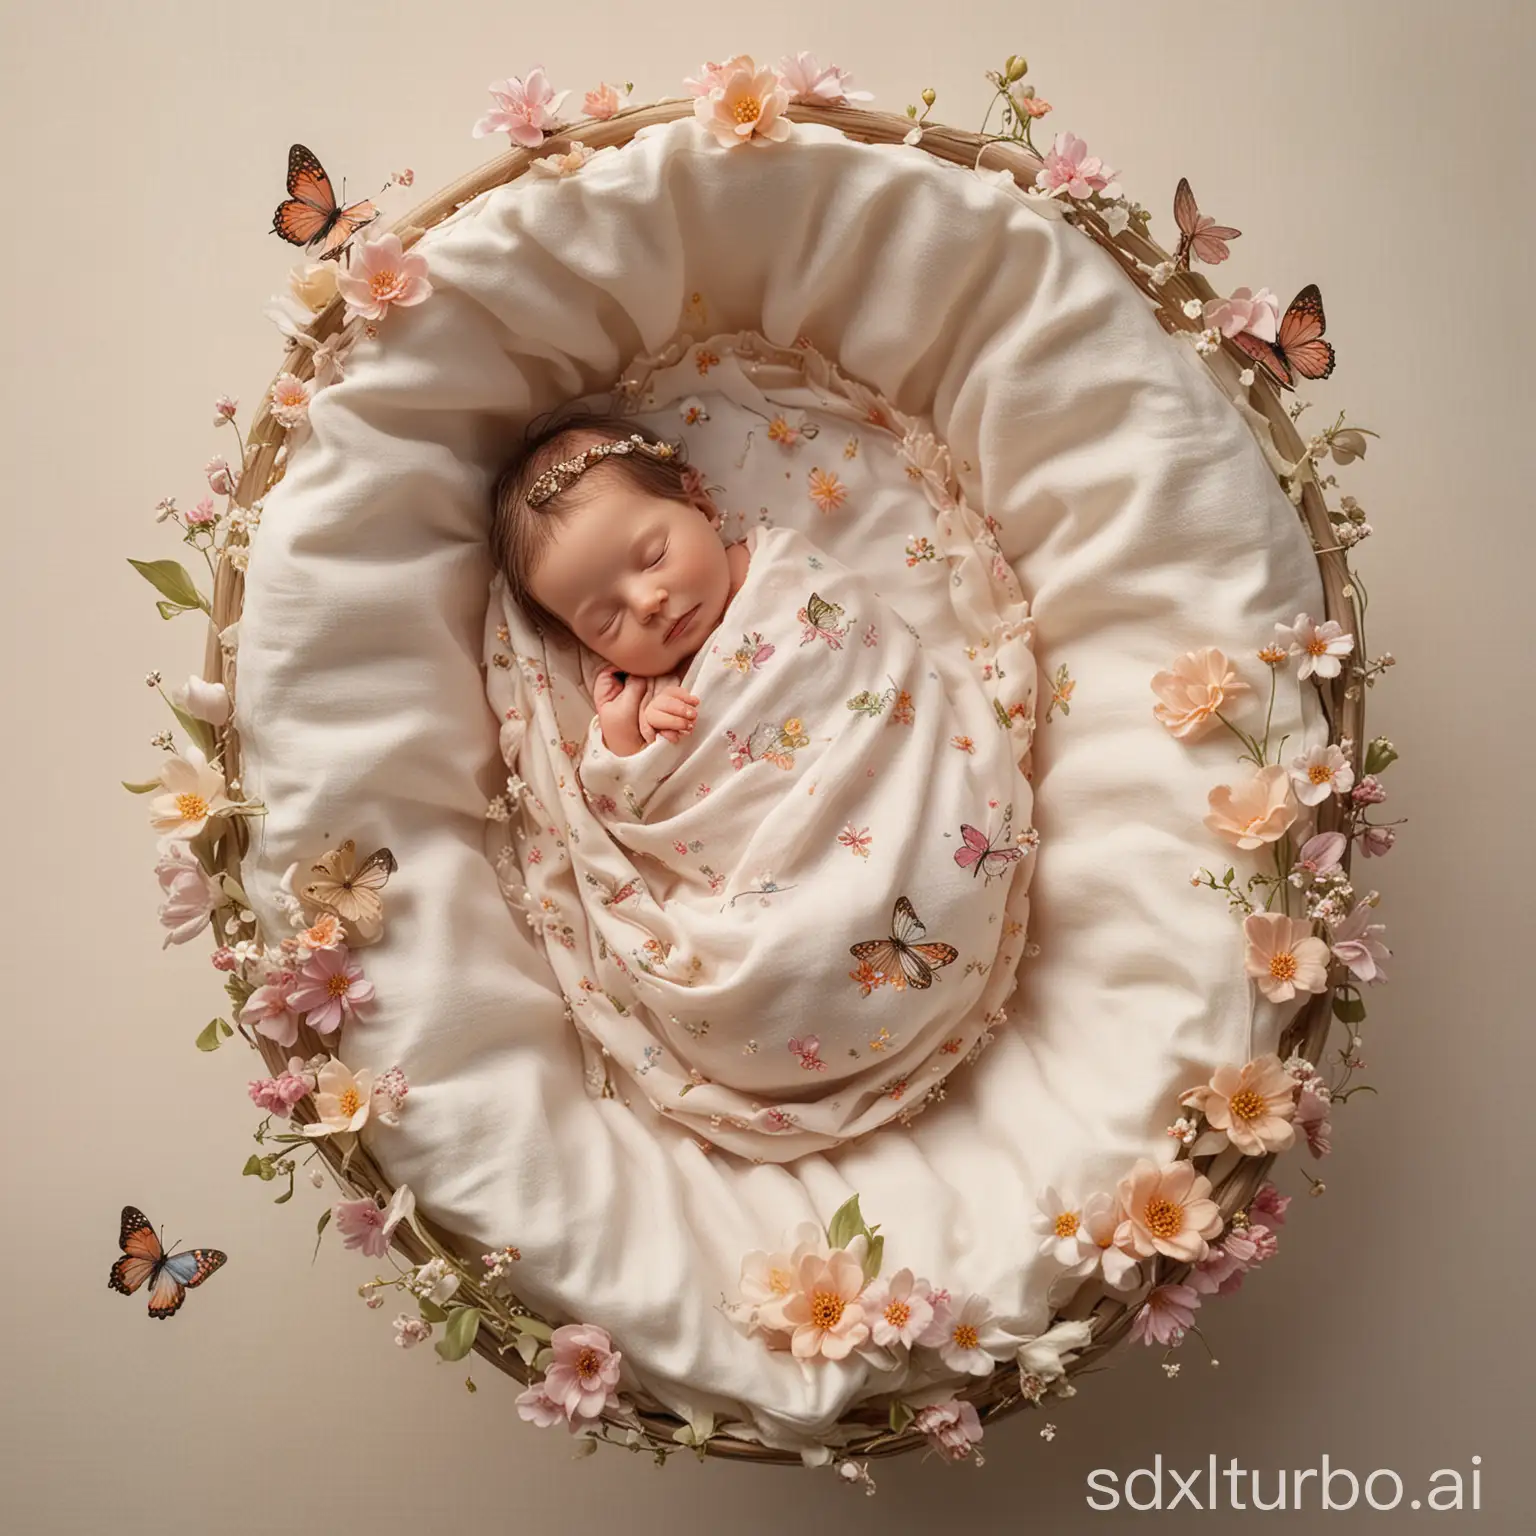 Sleeping-Newborn-in-Flower-Bud-Cradle-Surrounded-by-Glowing-Fairies